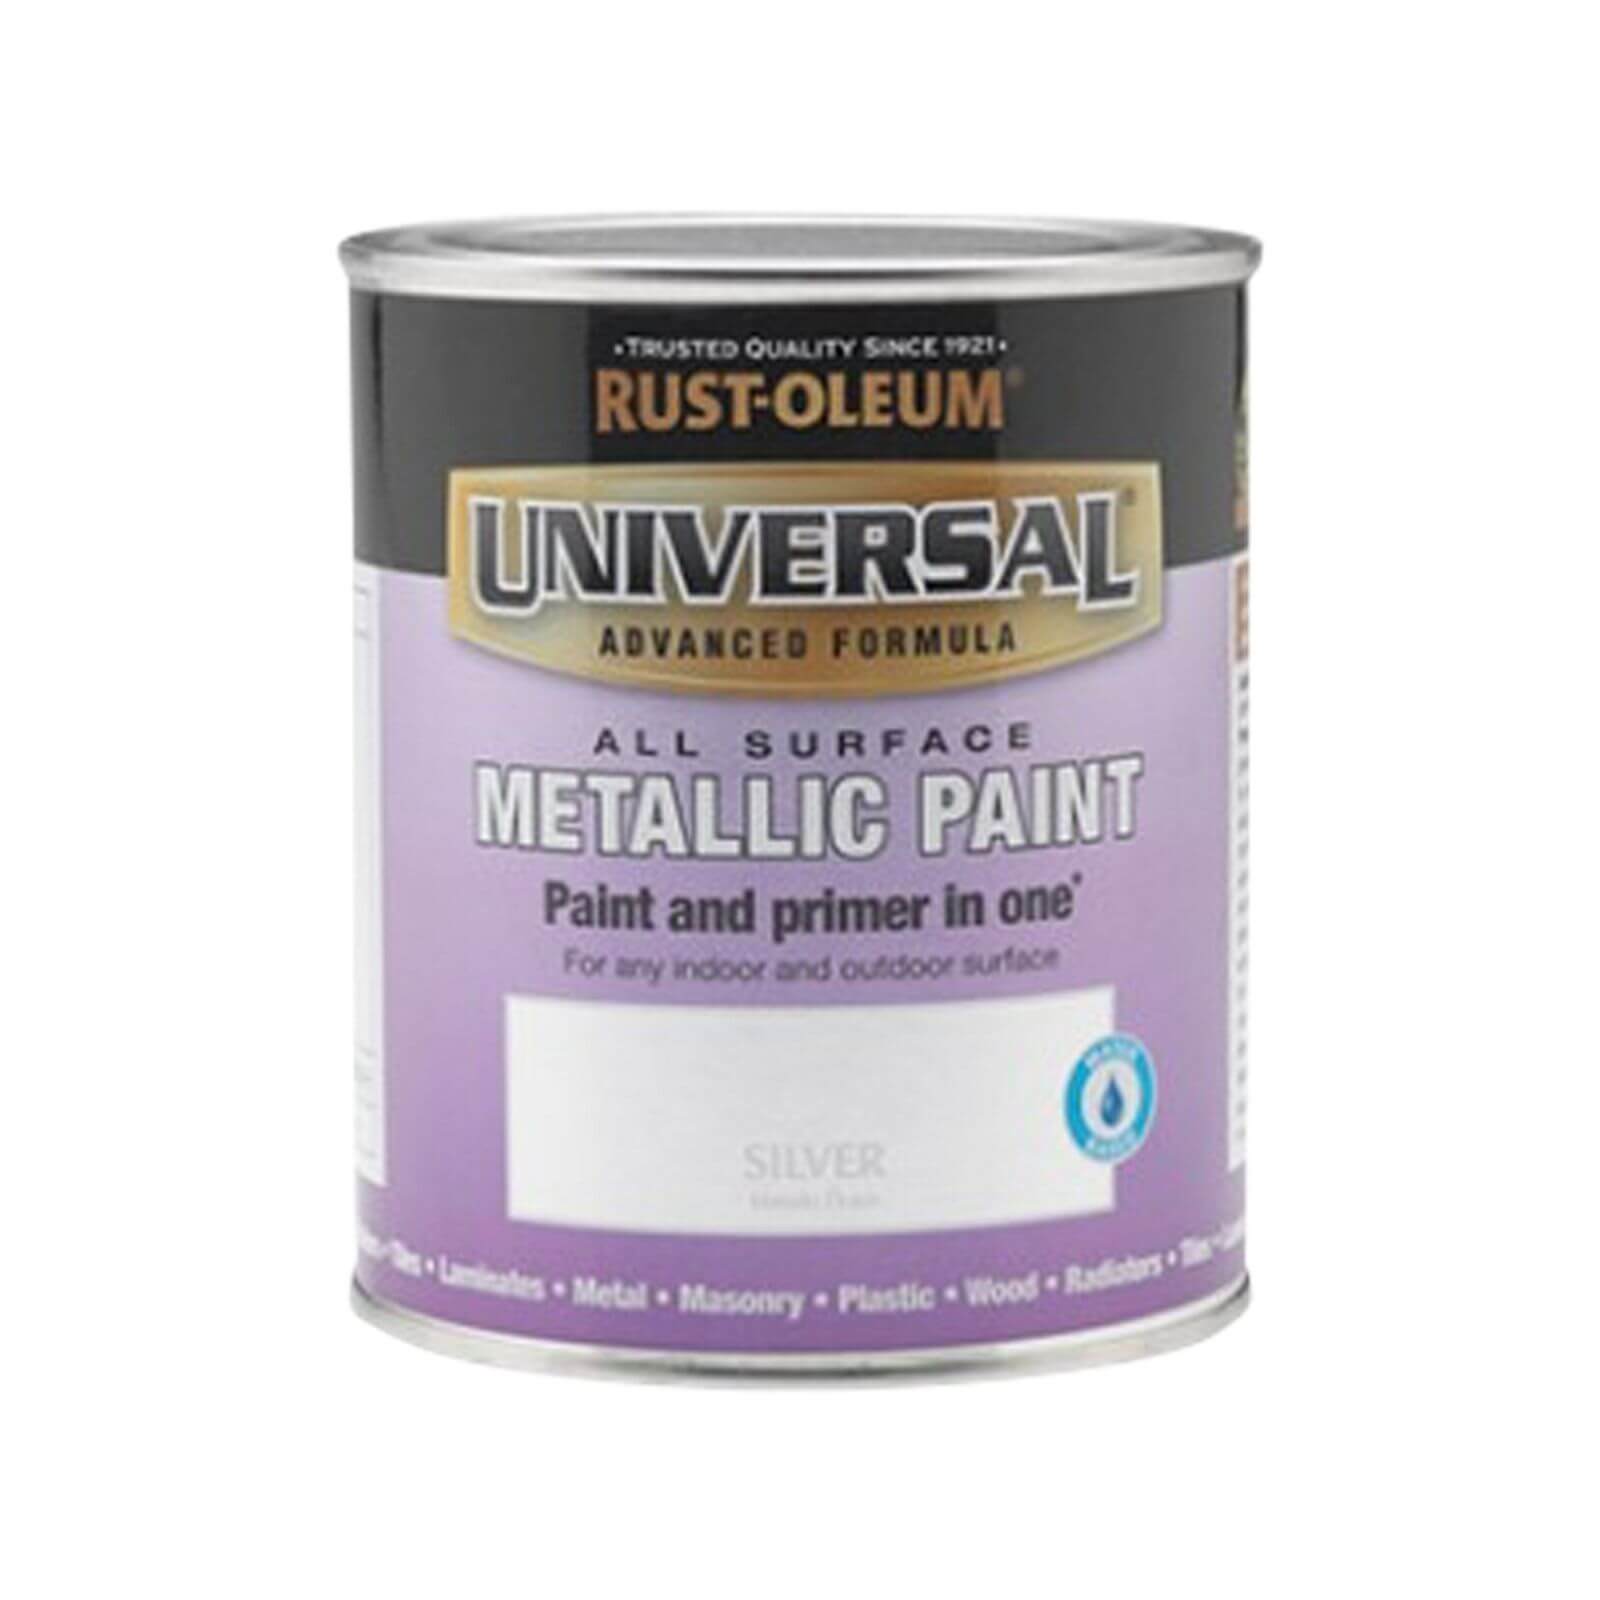 Rust-Oleum Universal All Surface Metallic Paint & Primer - Silver - 750ml